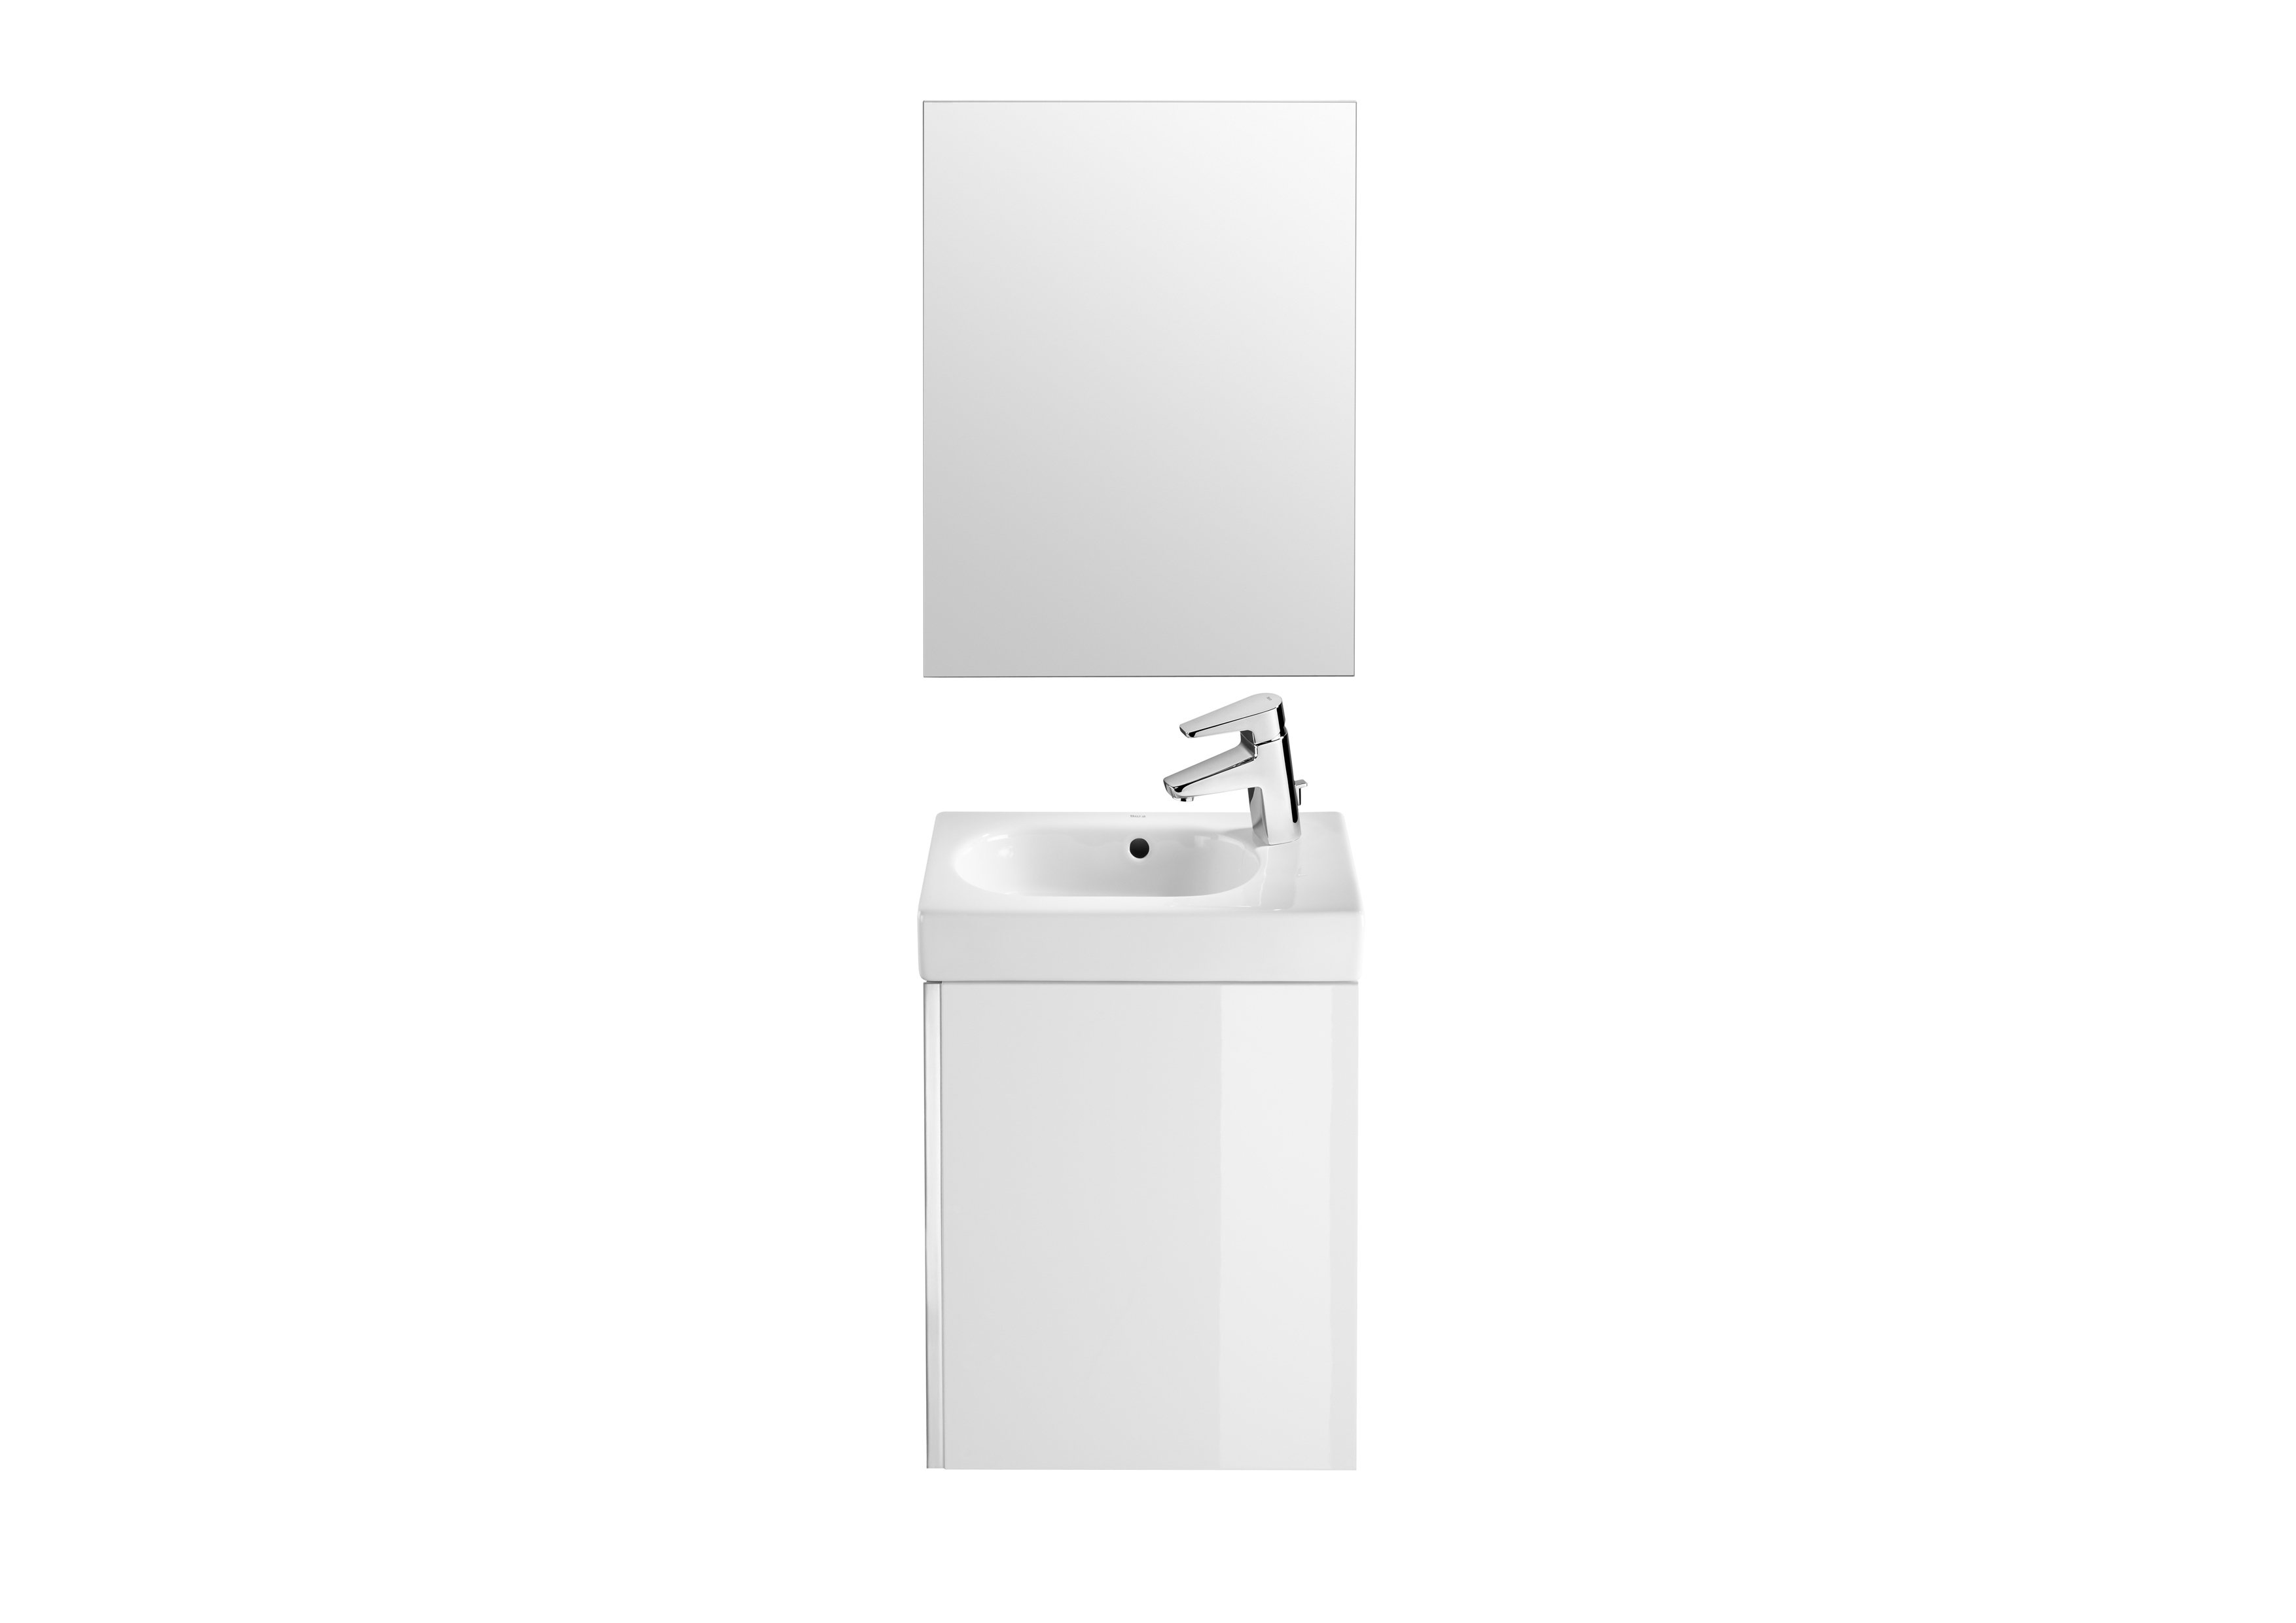 Mobiliere baie cu lavoar - Set unitate de baza, lavoar si oglinda, Roca, 450x250x575mm, alb lucios, bilden.ro